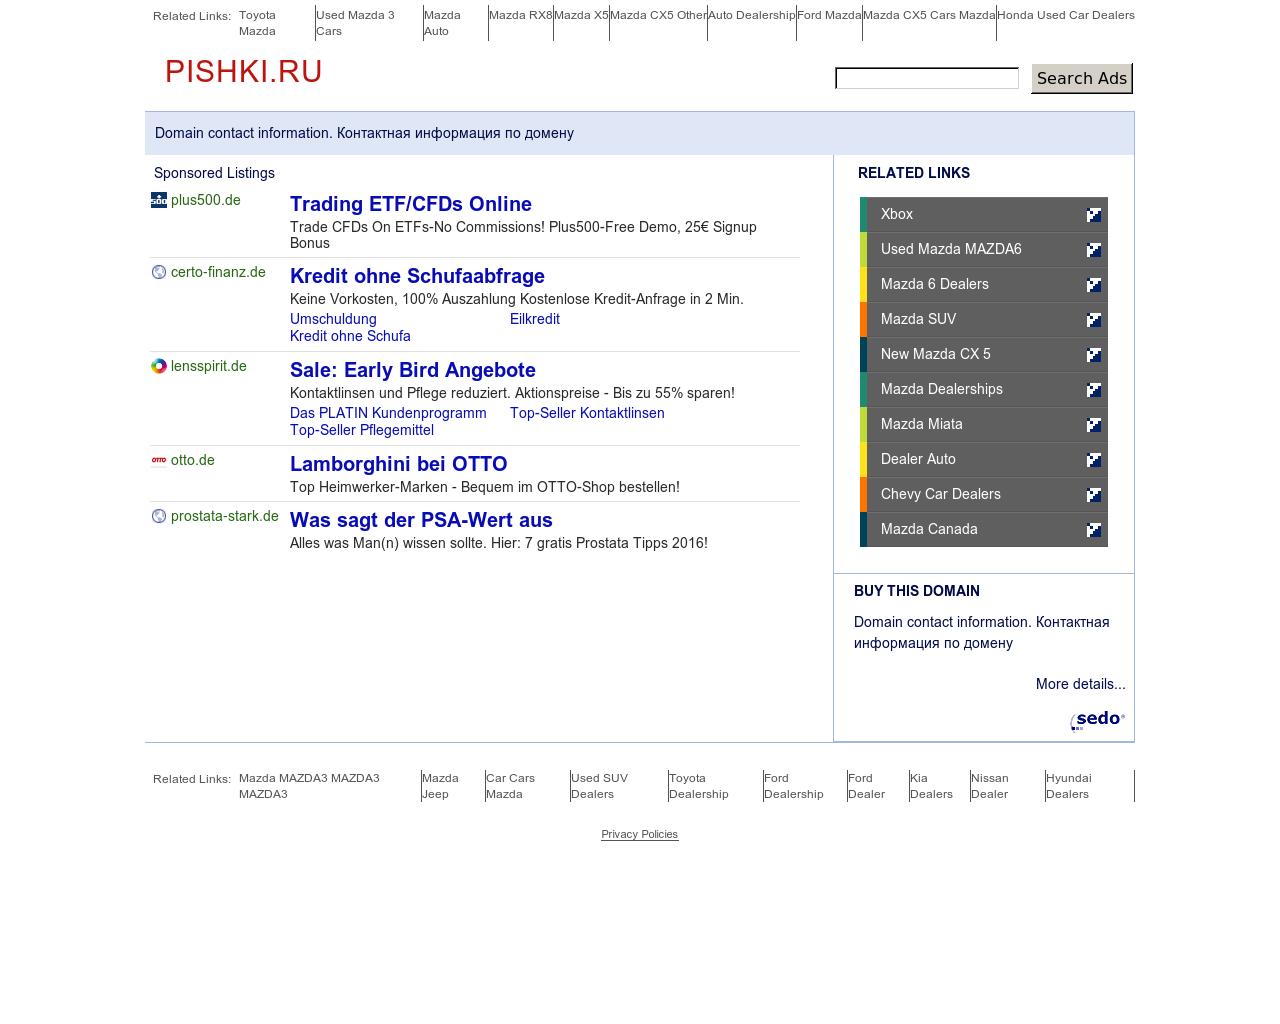 Изображение сайта pishki.ru в разрешении 1280x1024